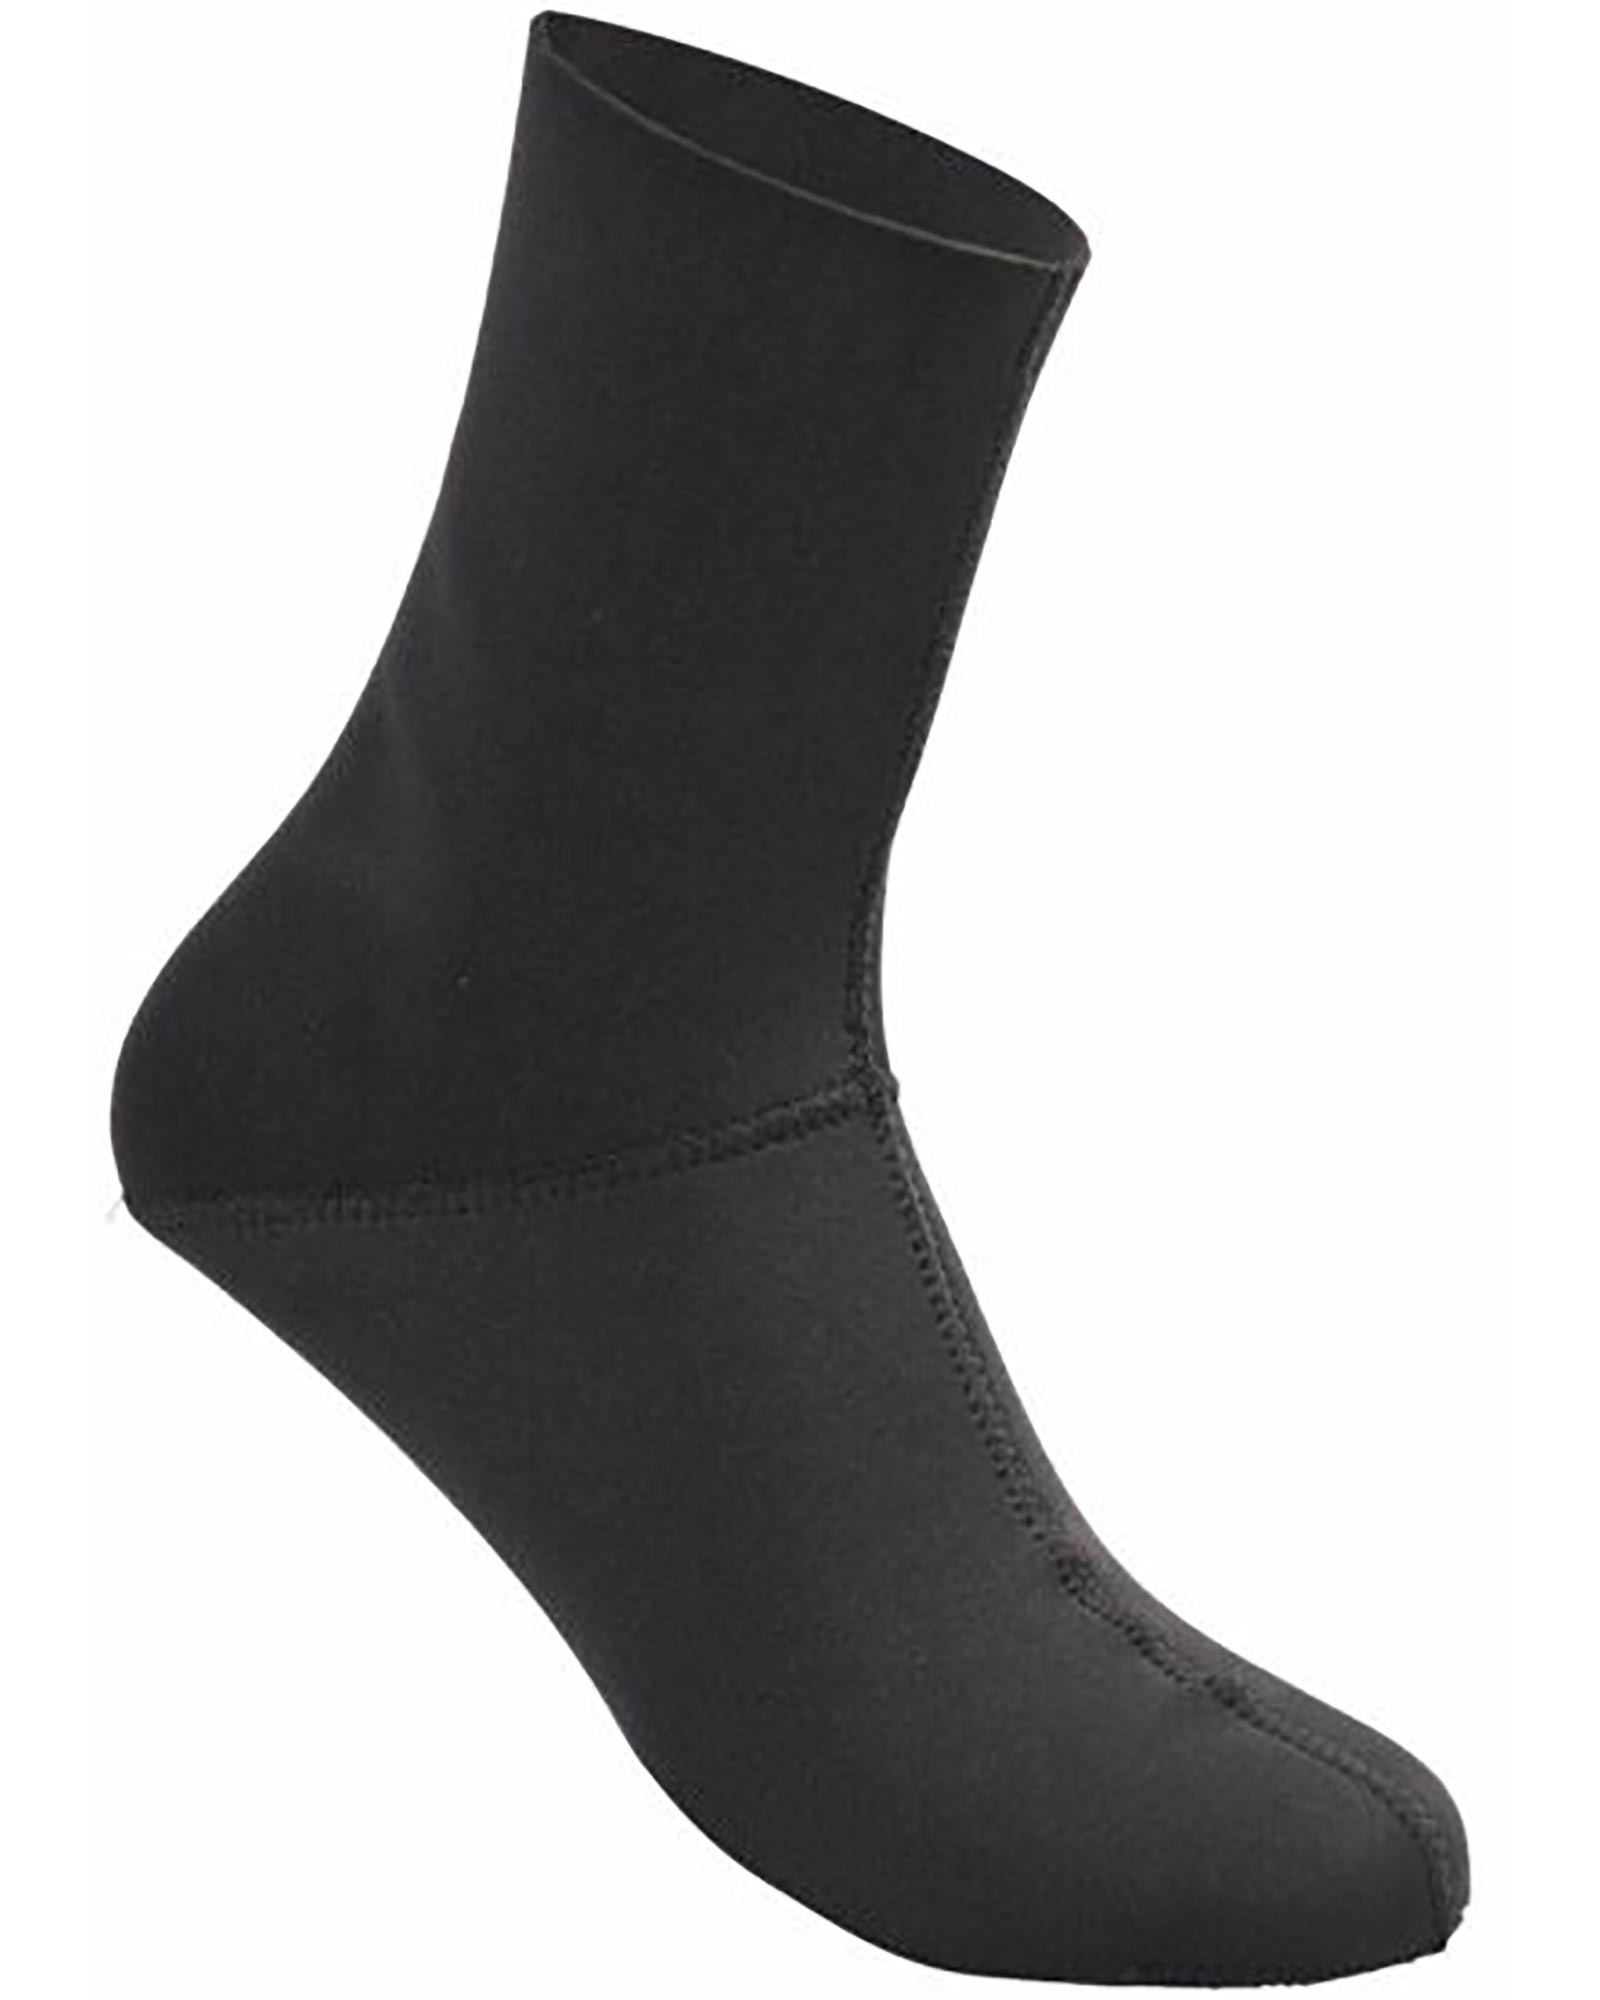 Inov 8 Extreme Thermo Socks - black S